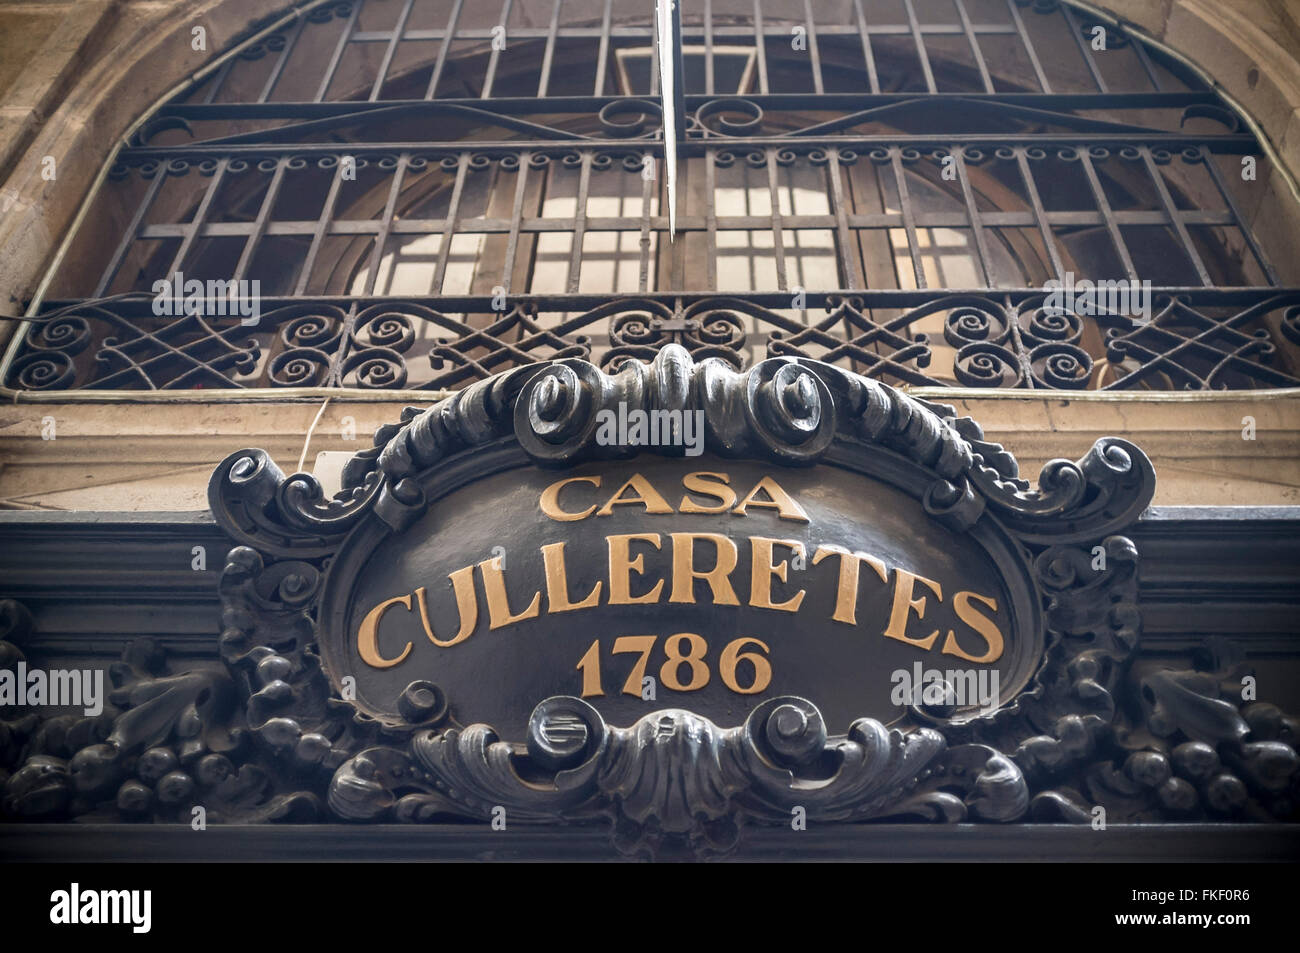 Casa  Culleretes, restaurant, since 1796. Calle Quintana, Ciutat Vella, Barcelona. Stock Photo